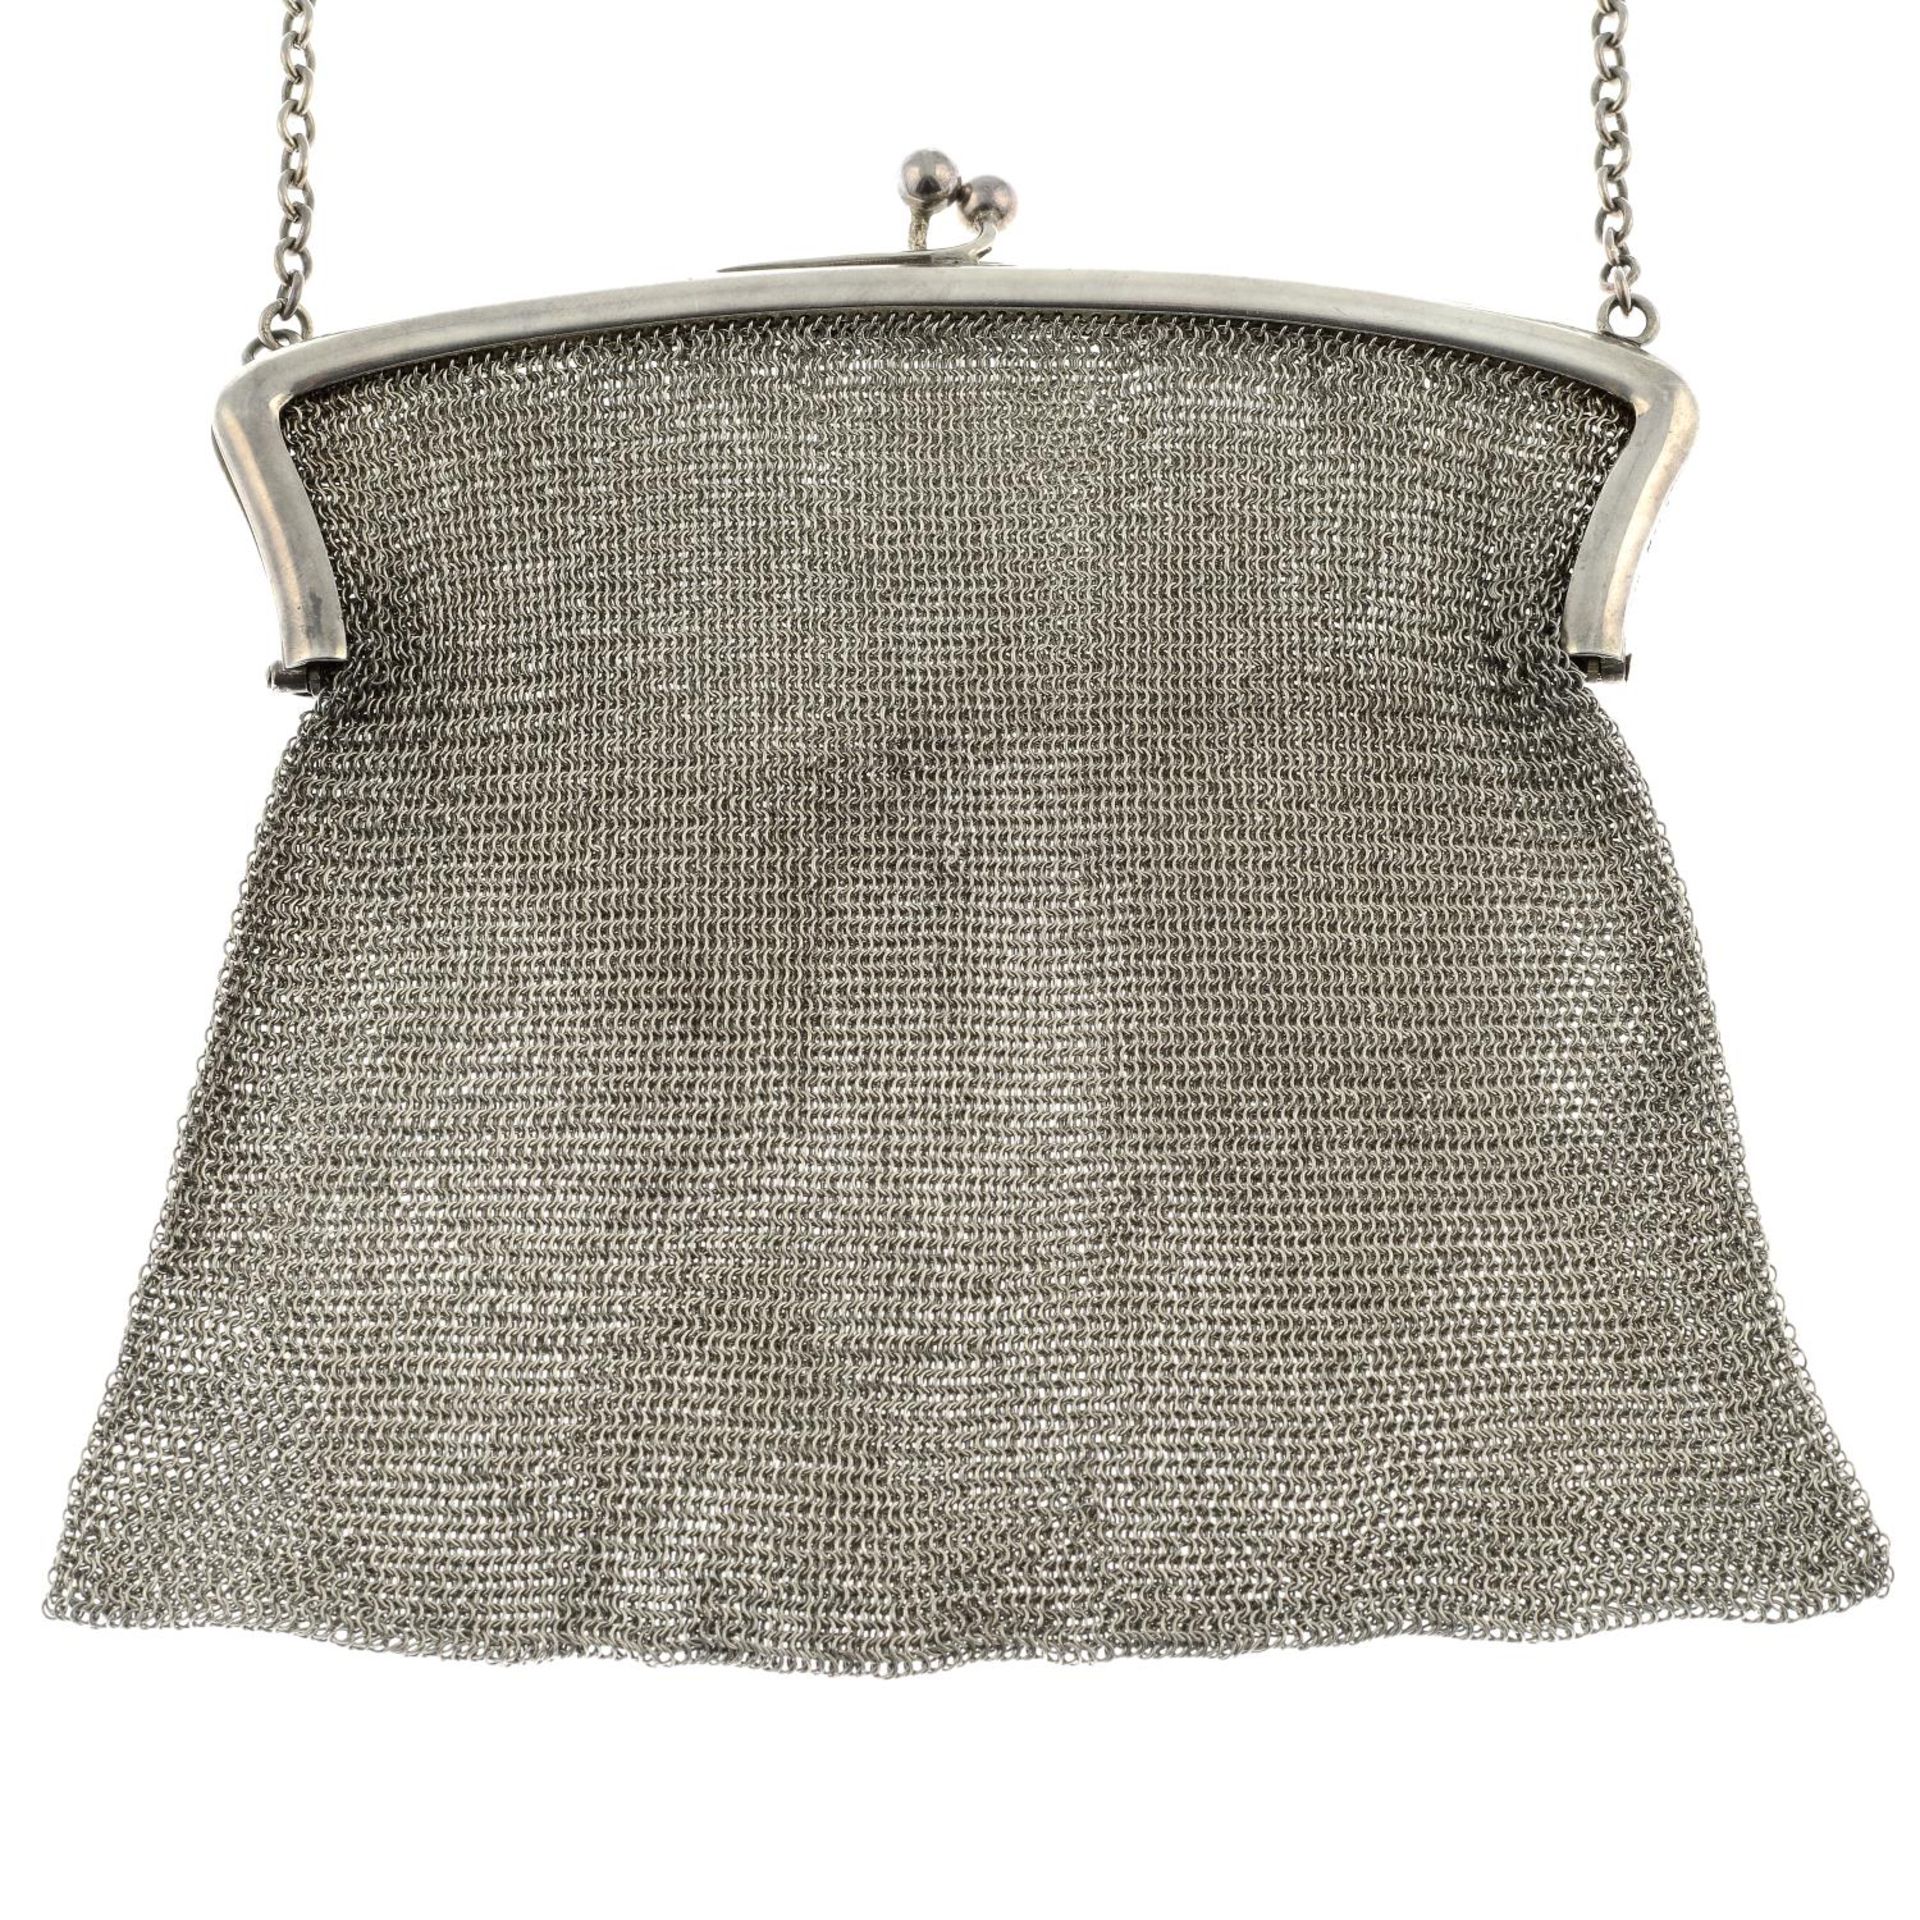 An early 20th century silver mesh purse.Hallmarks for Birmingham, 1915.